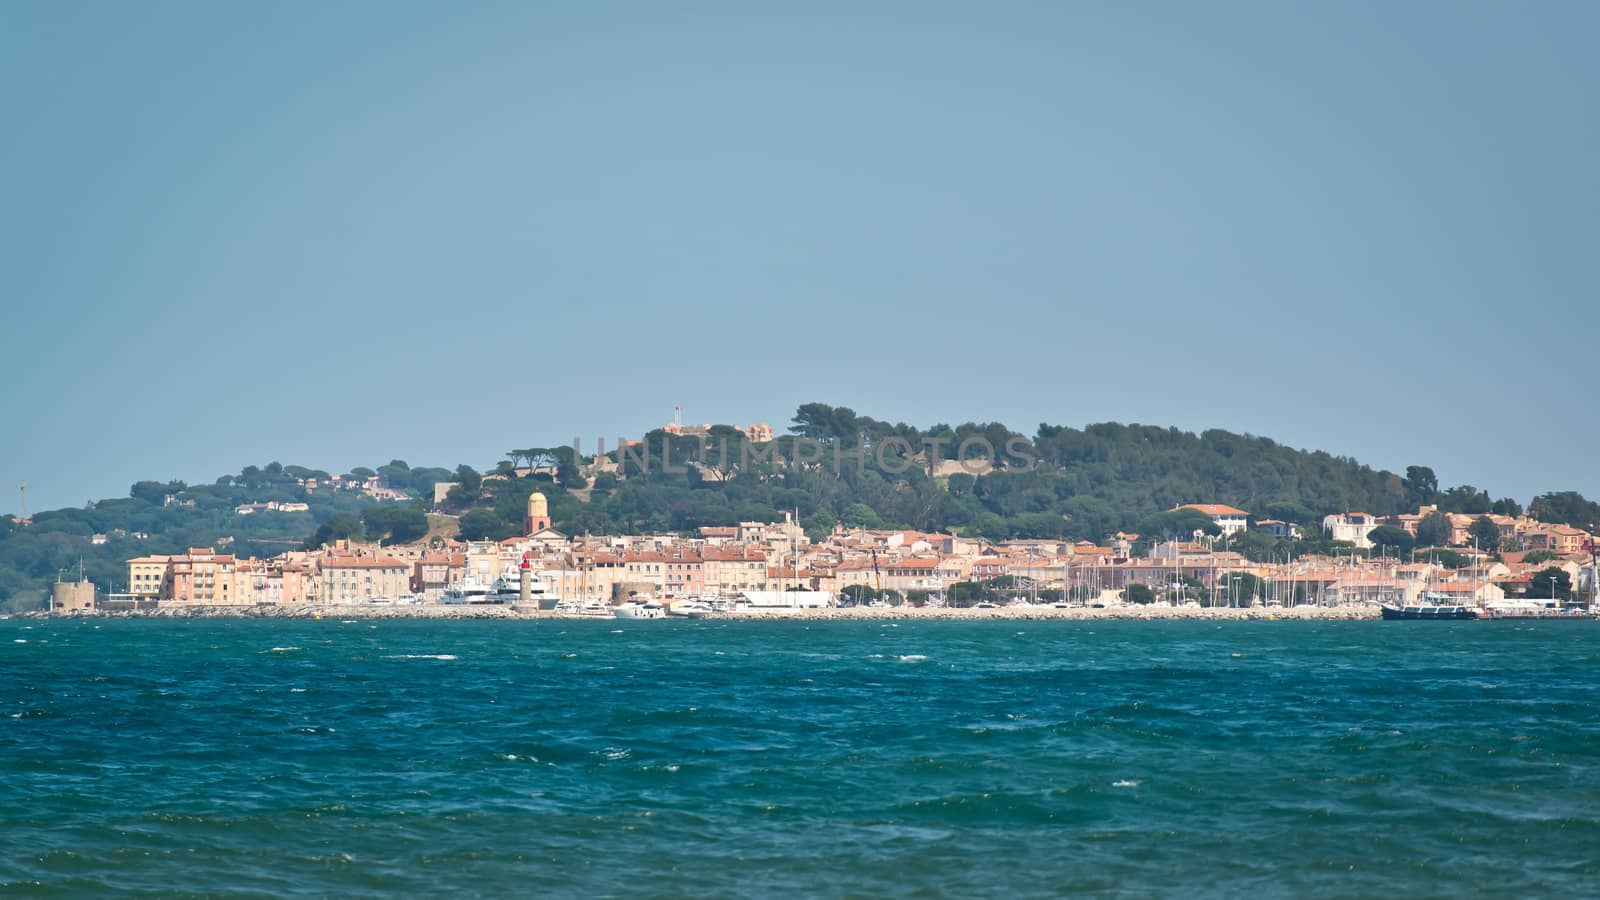 Center of St. Tropez - wiev from the sea by furzyk73